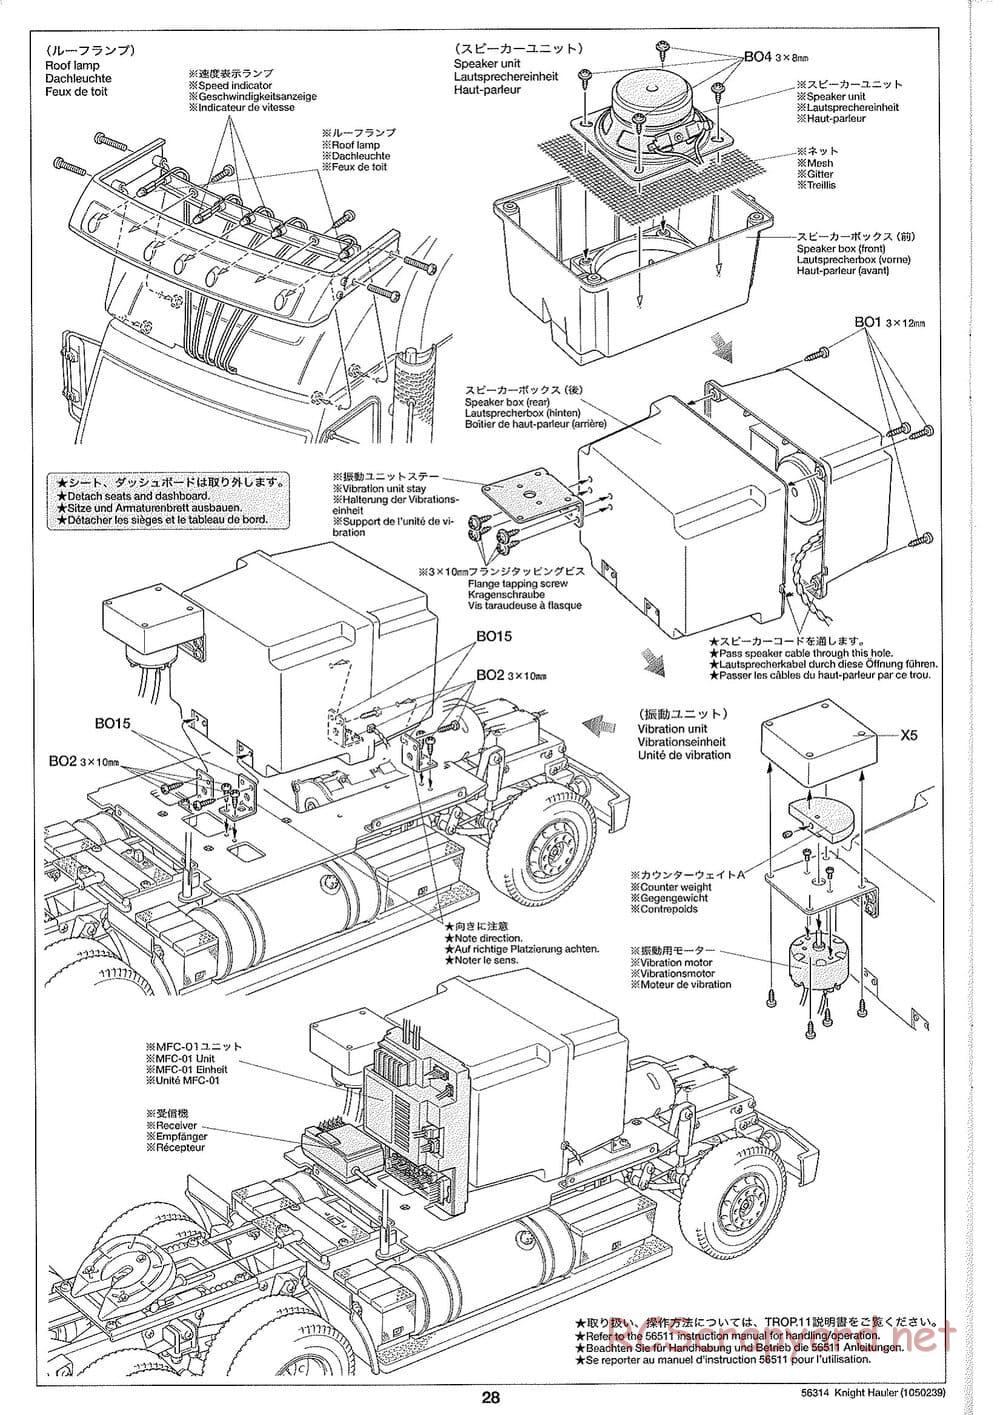 Tamiya - Knight Hauler Tractor Truck Chassis - Manual - Page 28